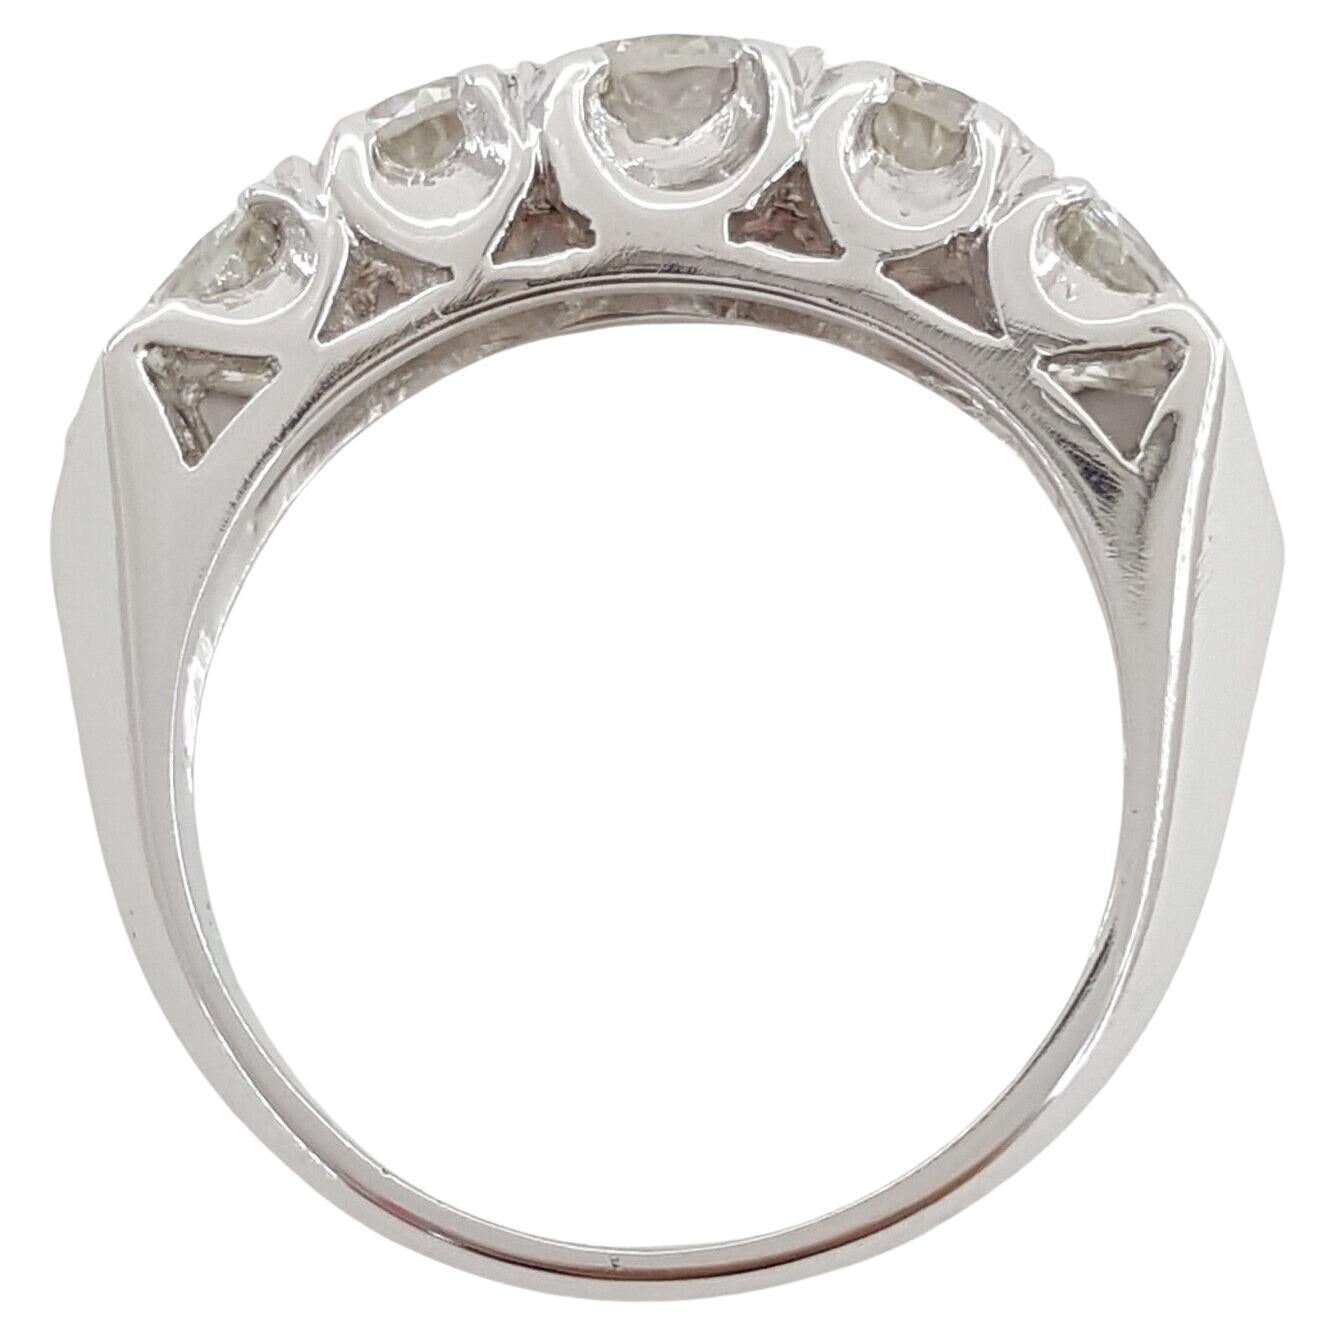 Contemporary 1950's 1.80 Carat Round Diamond Band Ring